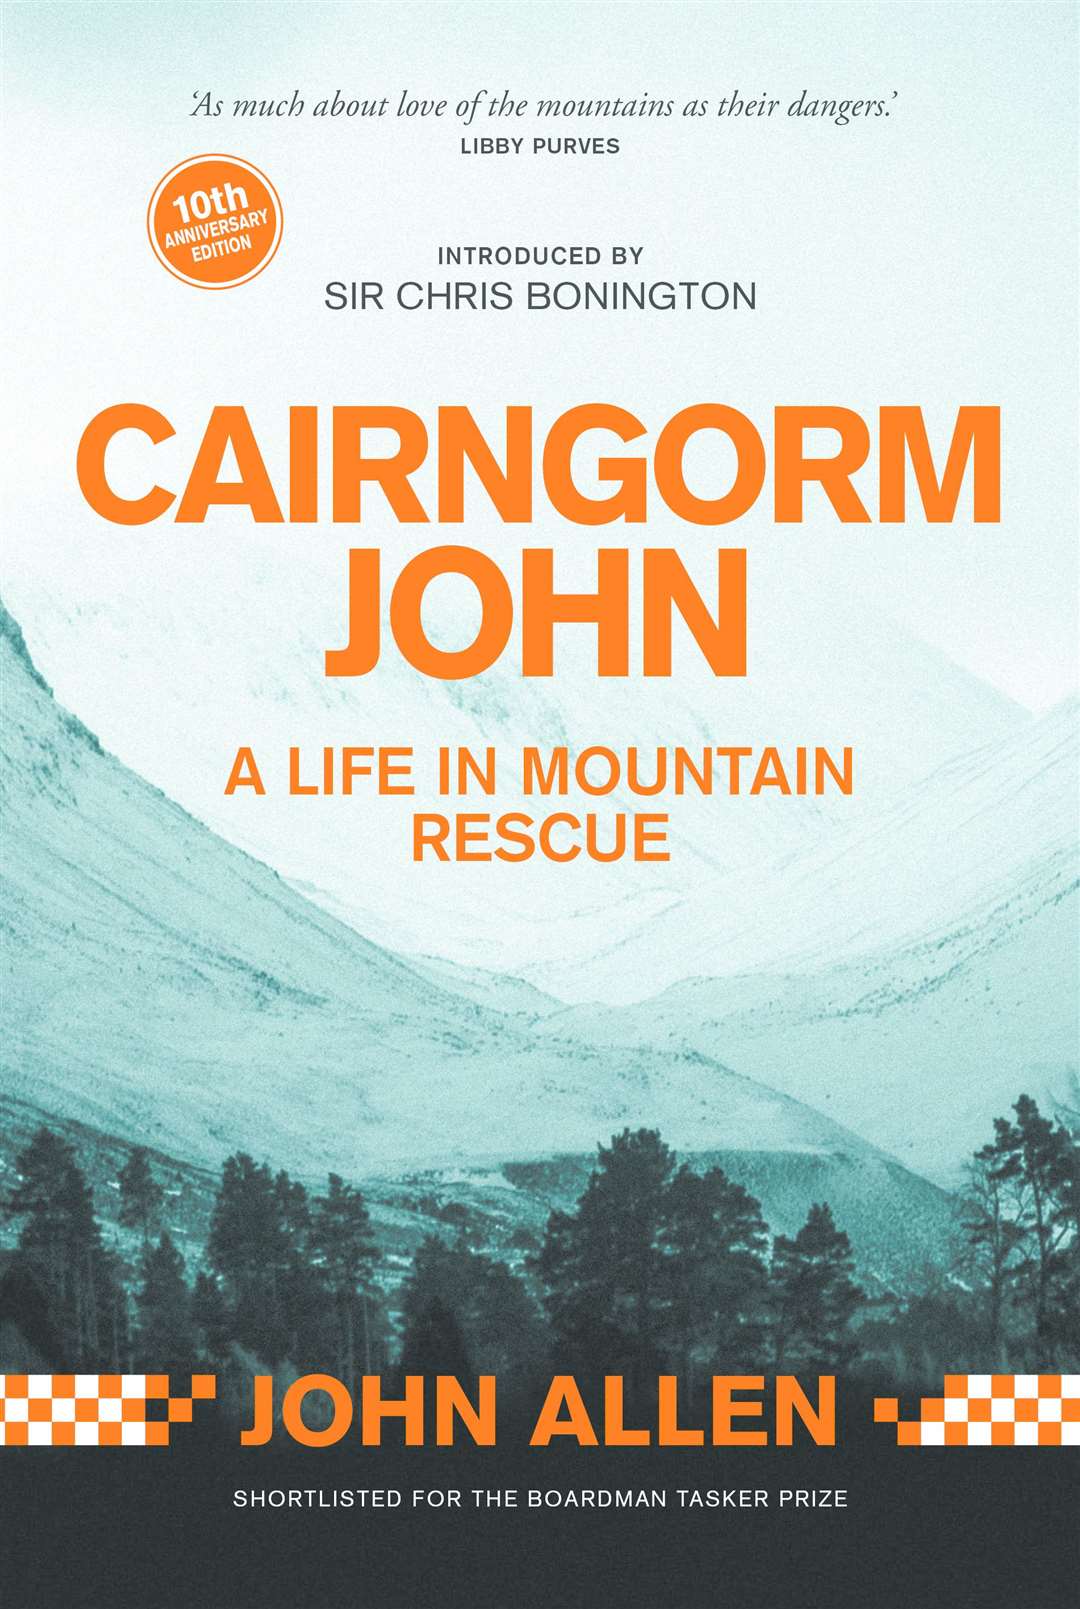 Cairngorm John by John Allen.